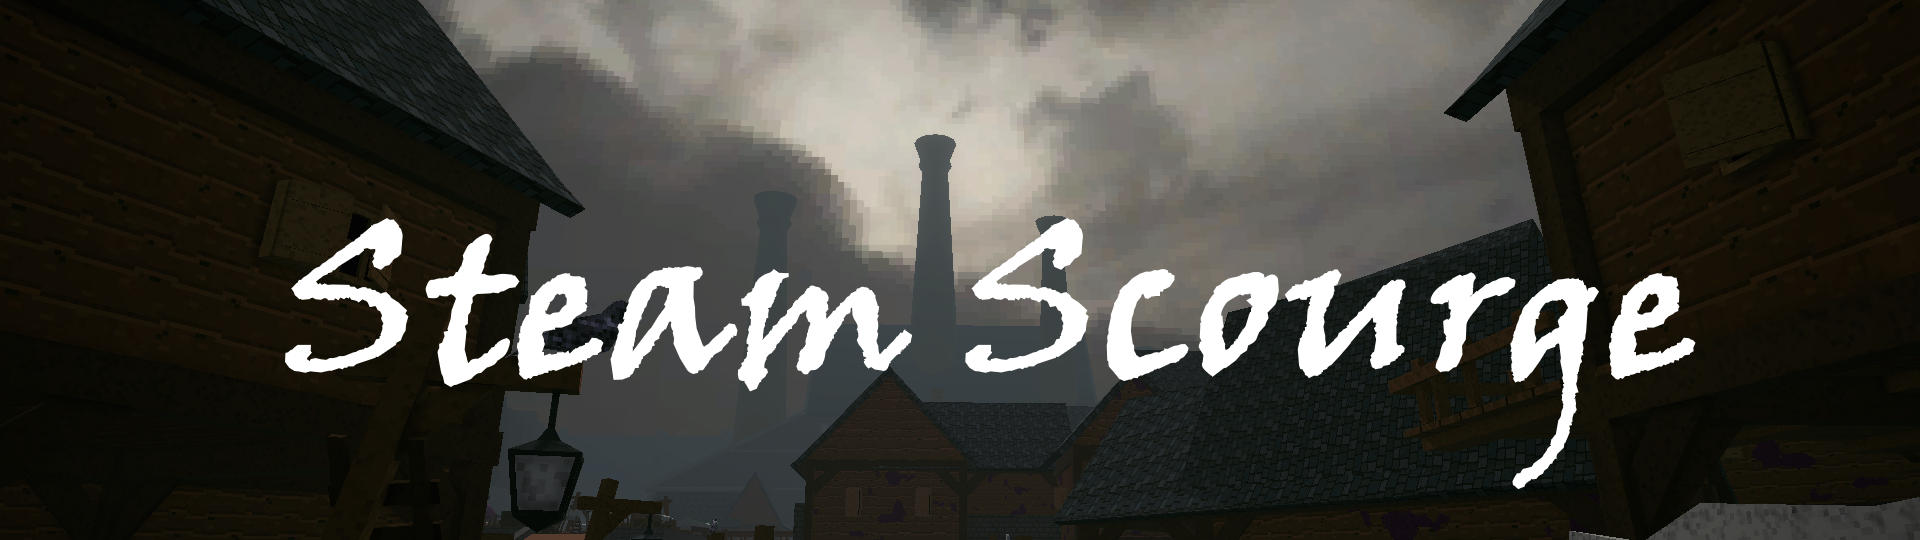 Steam Scourge